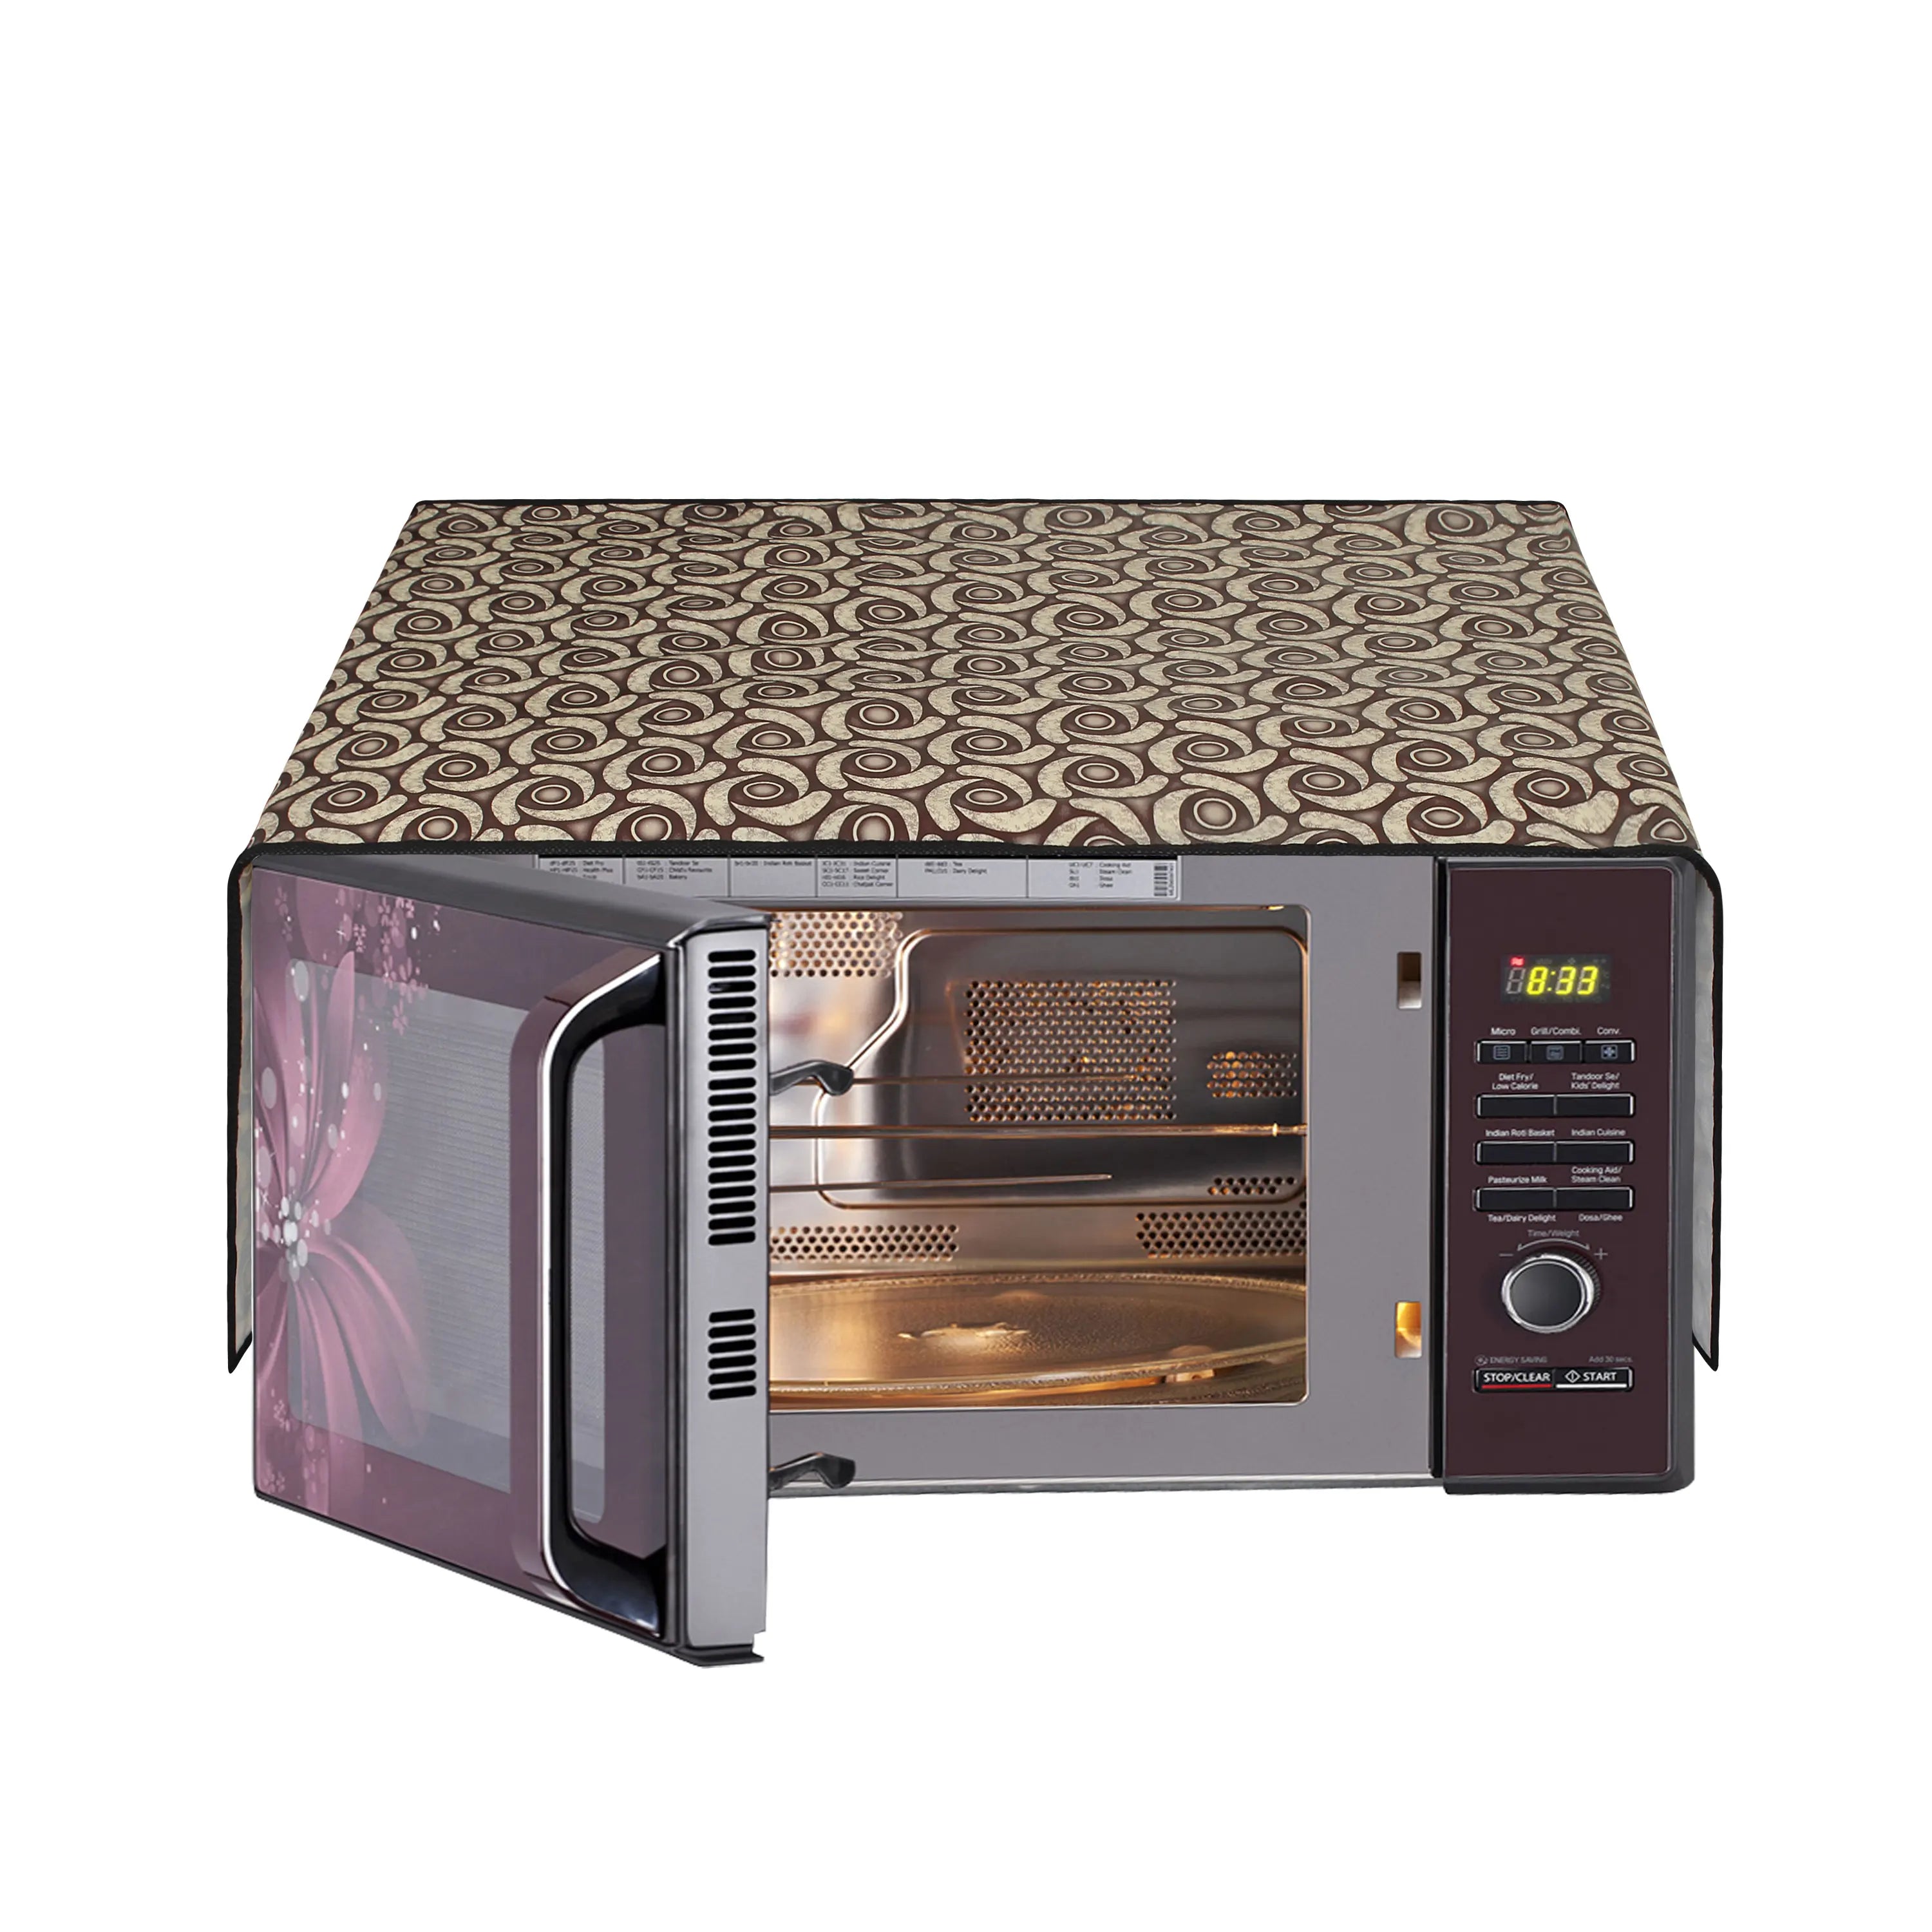 Microwave Oven Top Cover With Adjustable, SA58